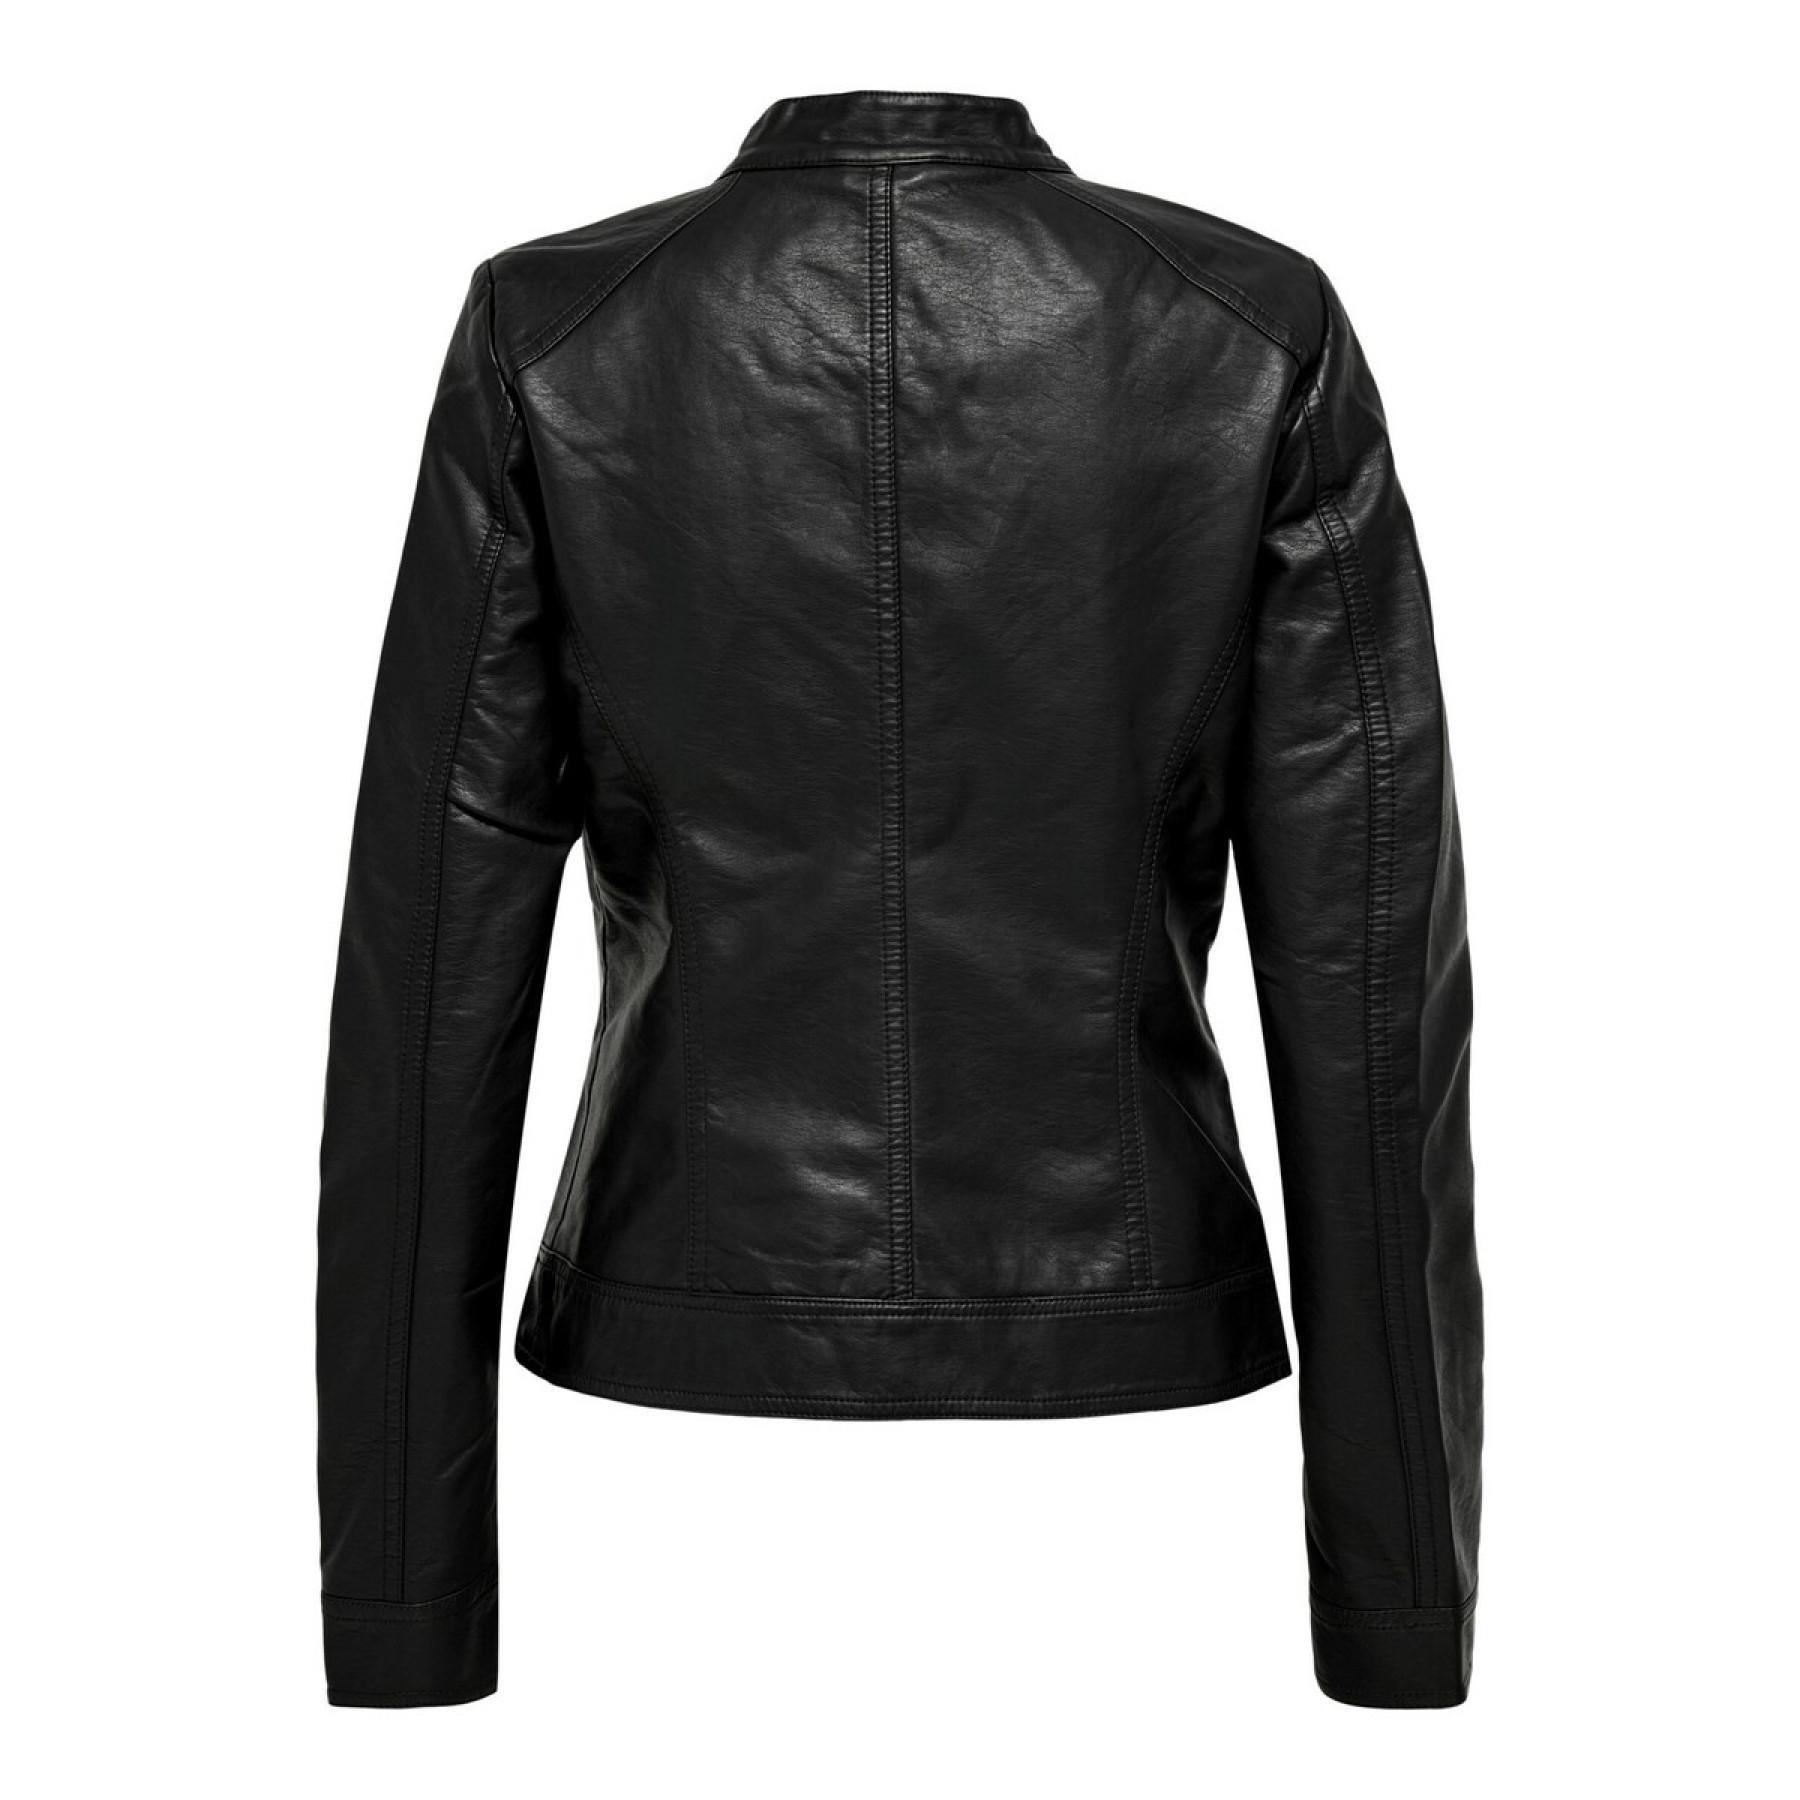 Leather jacket woman Only Bandit imitation cuir biker